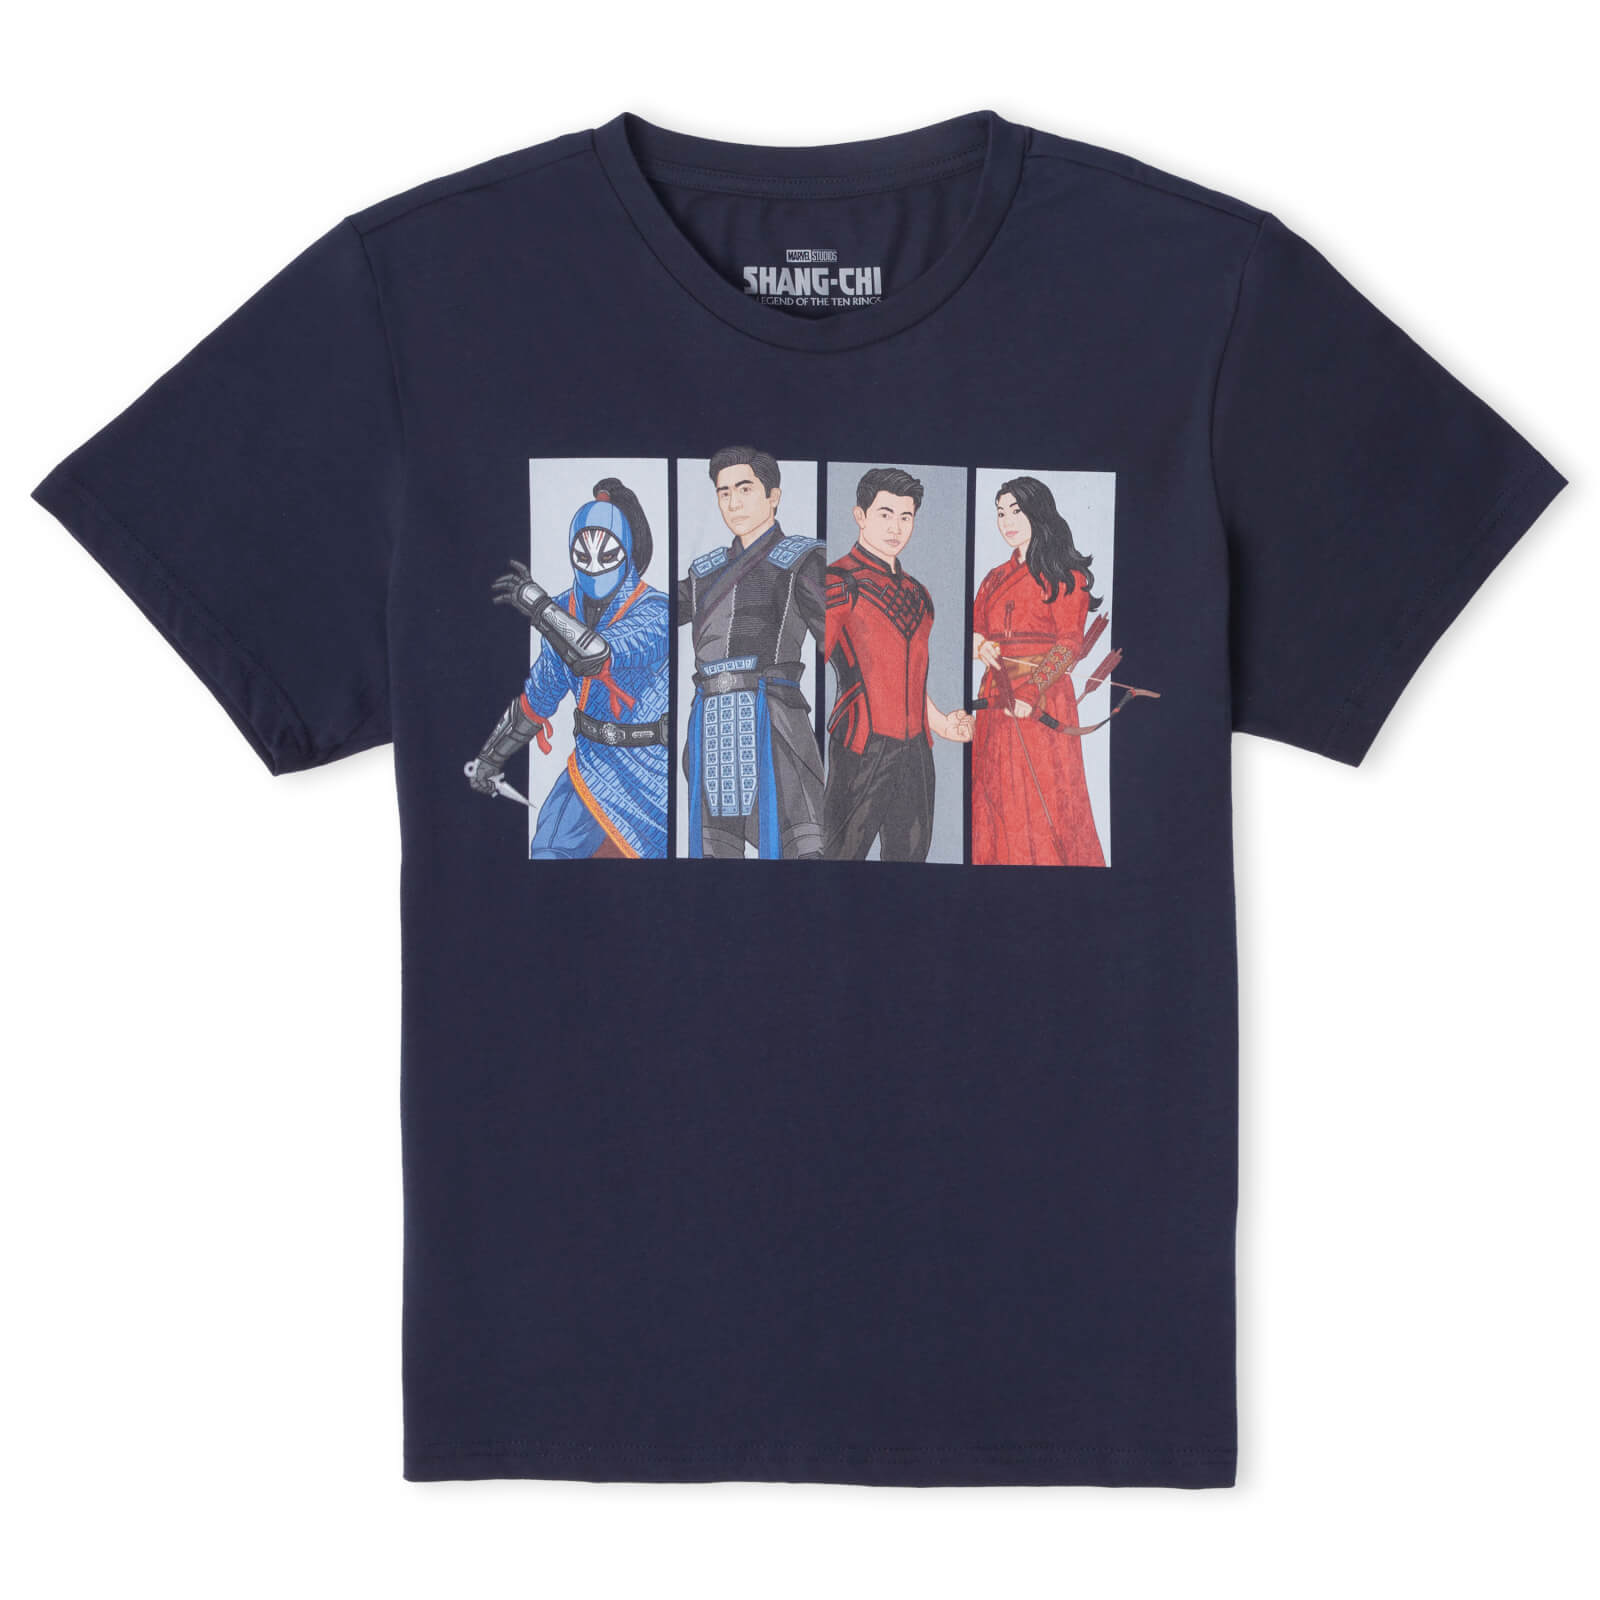 Shang-Chi Group Pose Men's T-Shirt - Navy - XS - Navy